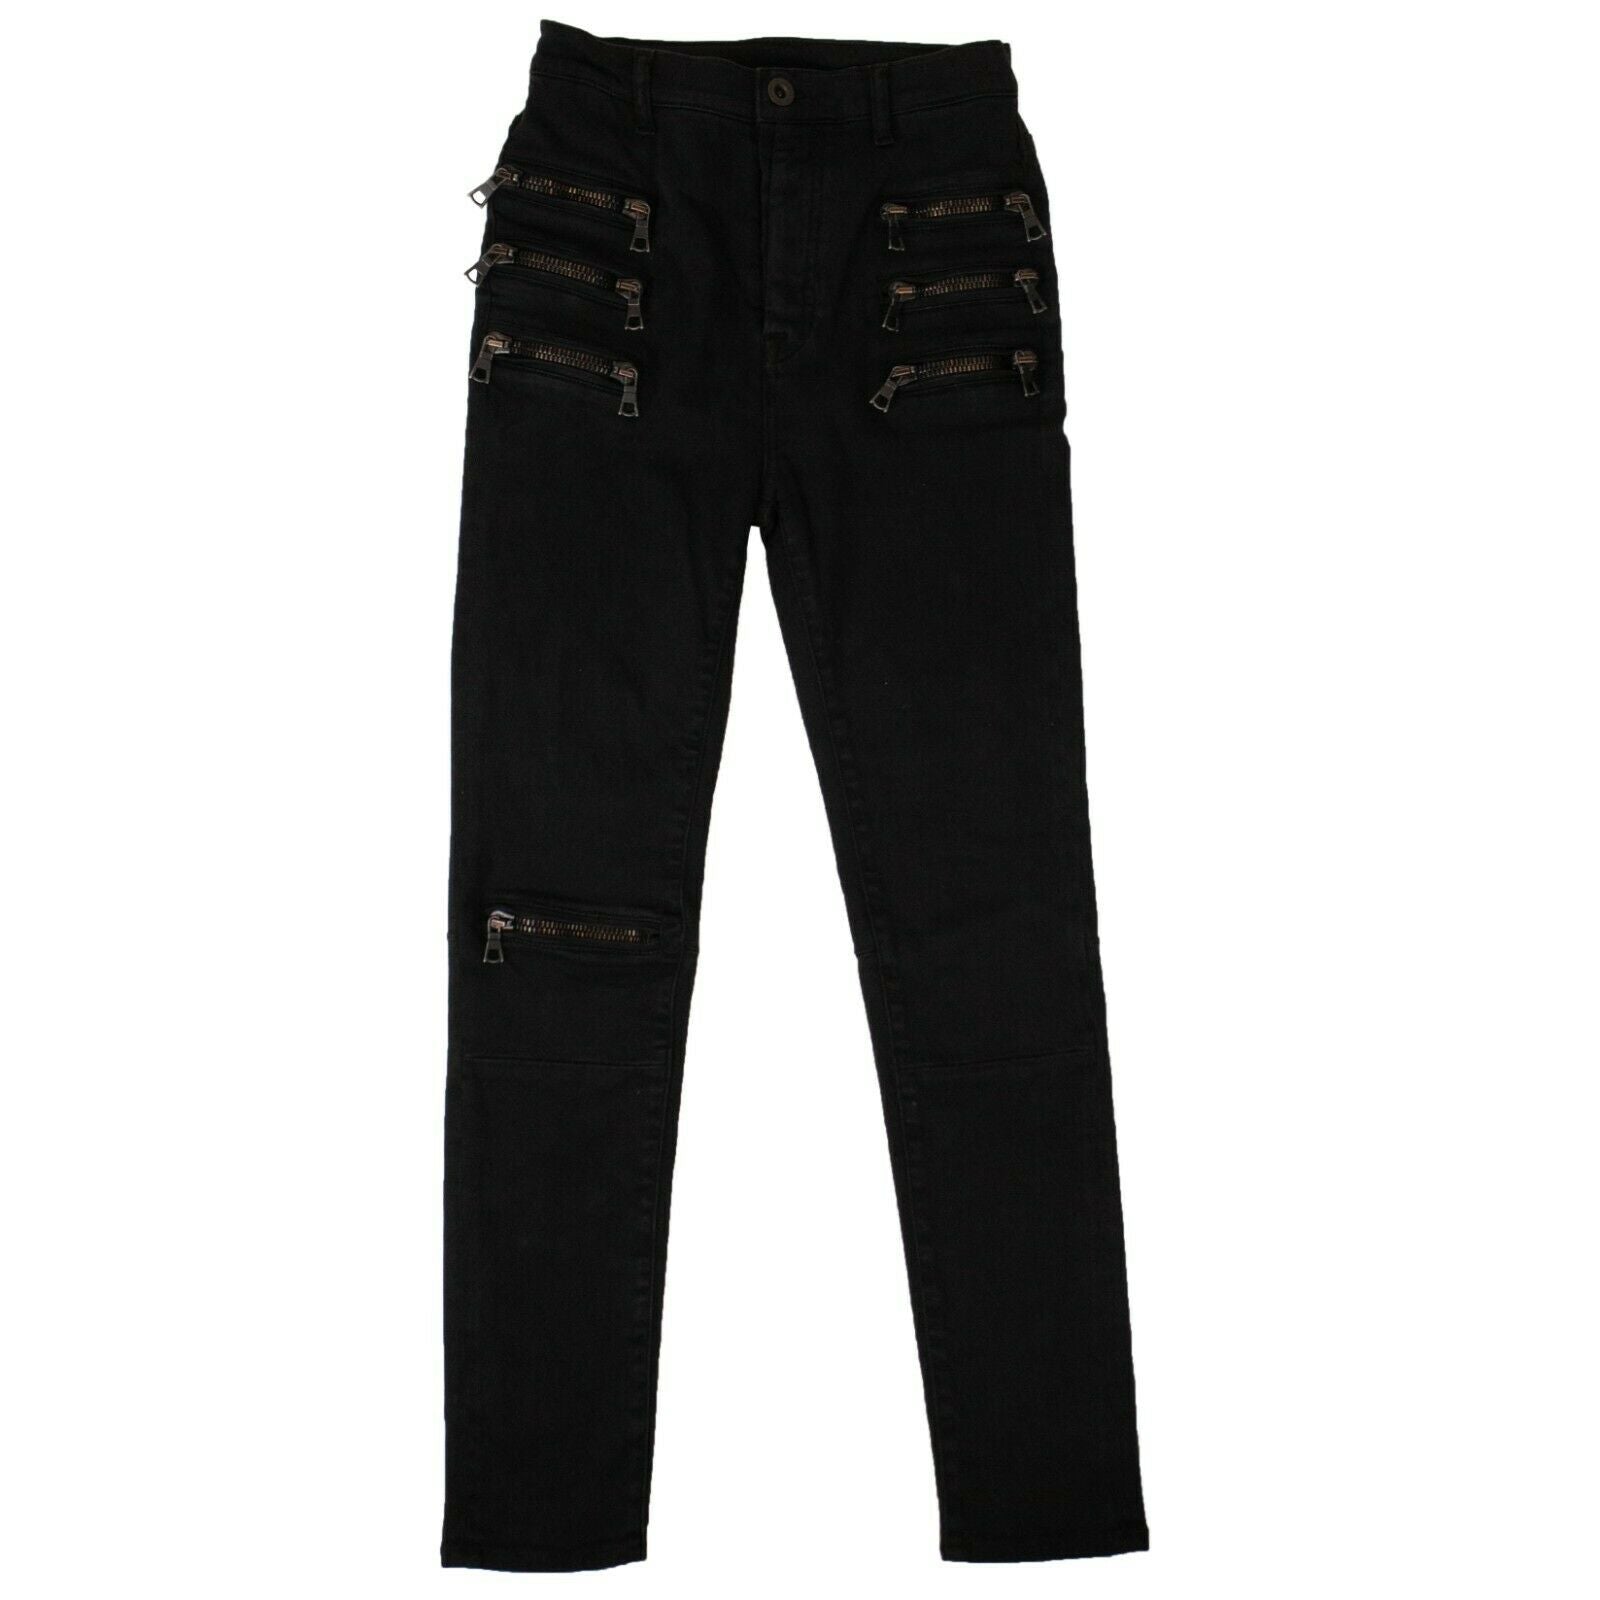 Unravel Project Multi Zip Skinny Jean Pants - Black